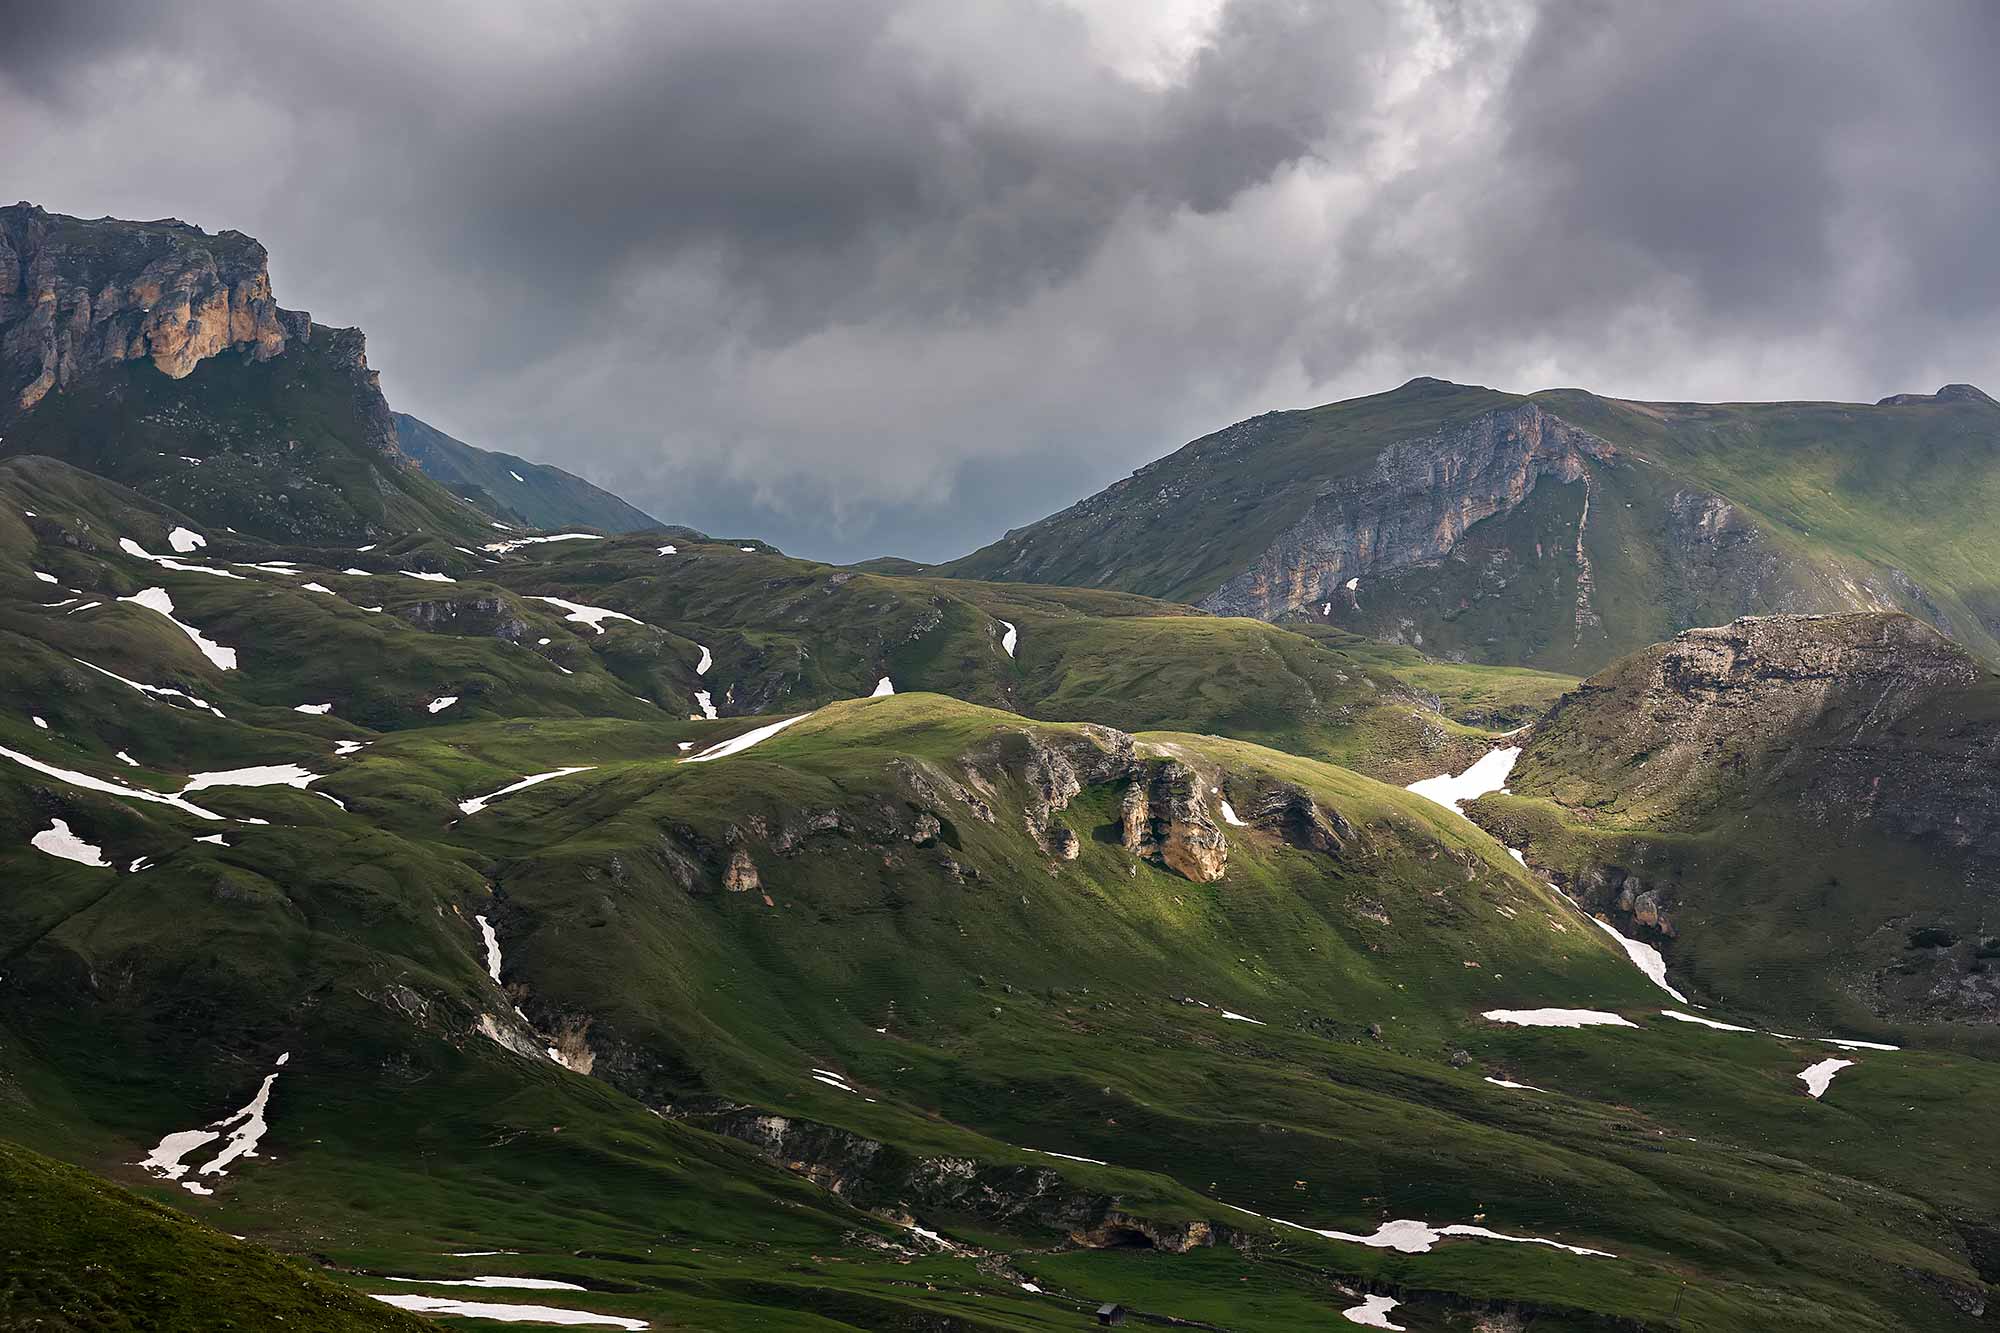 The landscape around the Grossglockner in Tyrol. © Ulli Maier & Nisa Maier